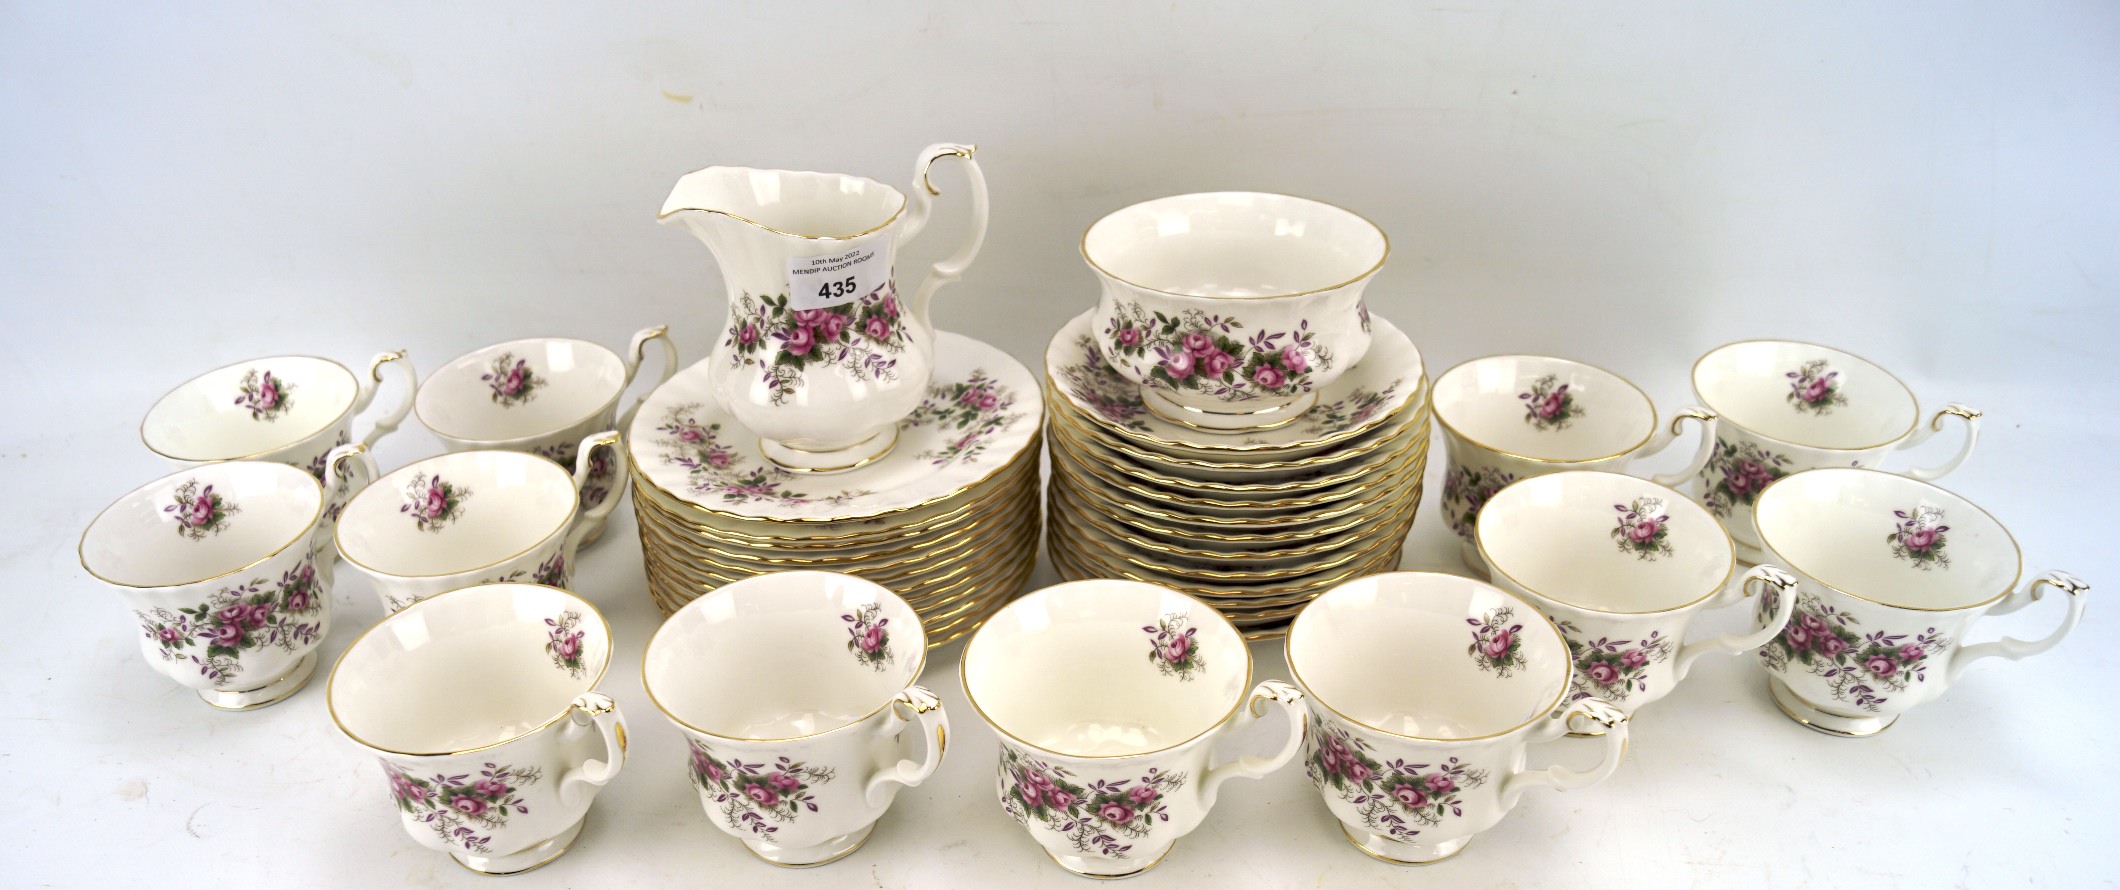 A Royal Albert 'Lavender Rose' pattern part tea set, including tea cups, saucers, side plates,